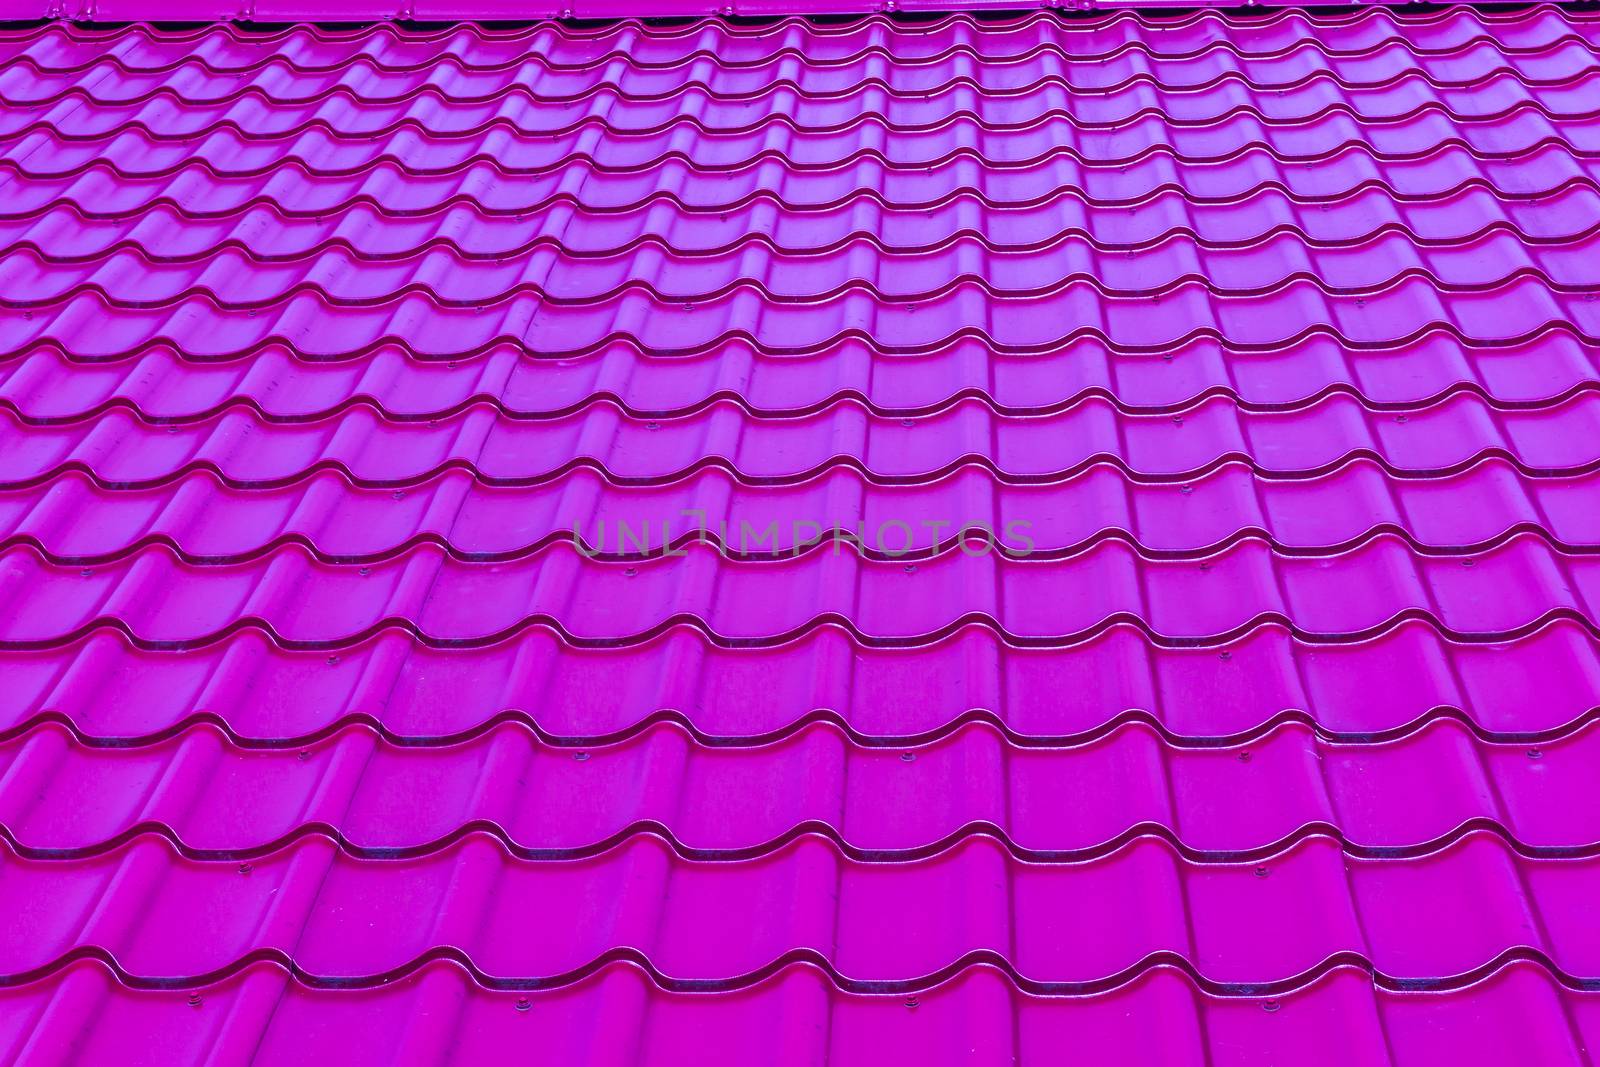 modern bright deep neon purple glossy rooftop tiling texture background by charlottebleijenberg